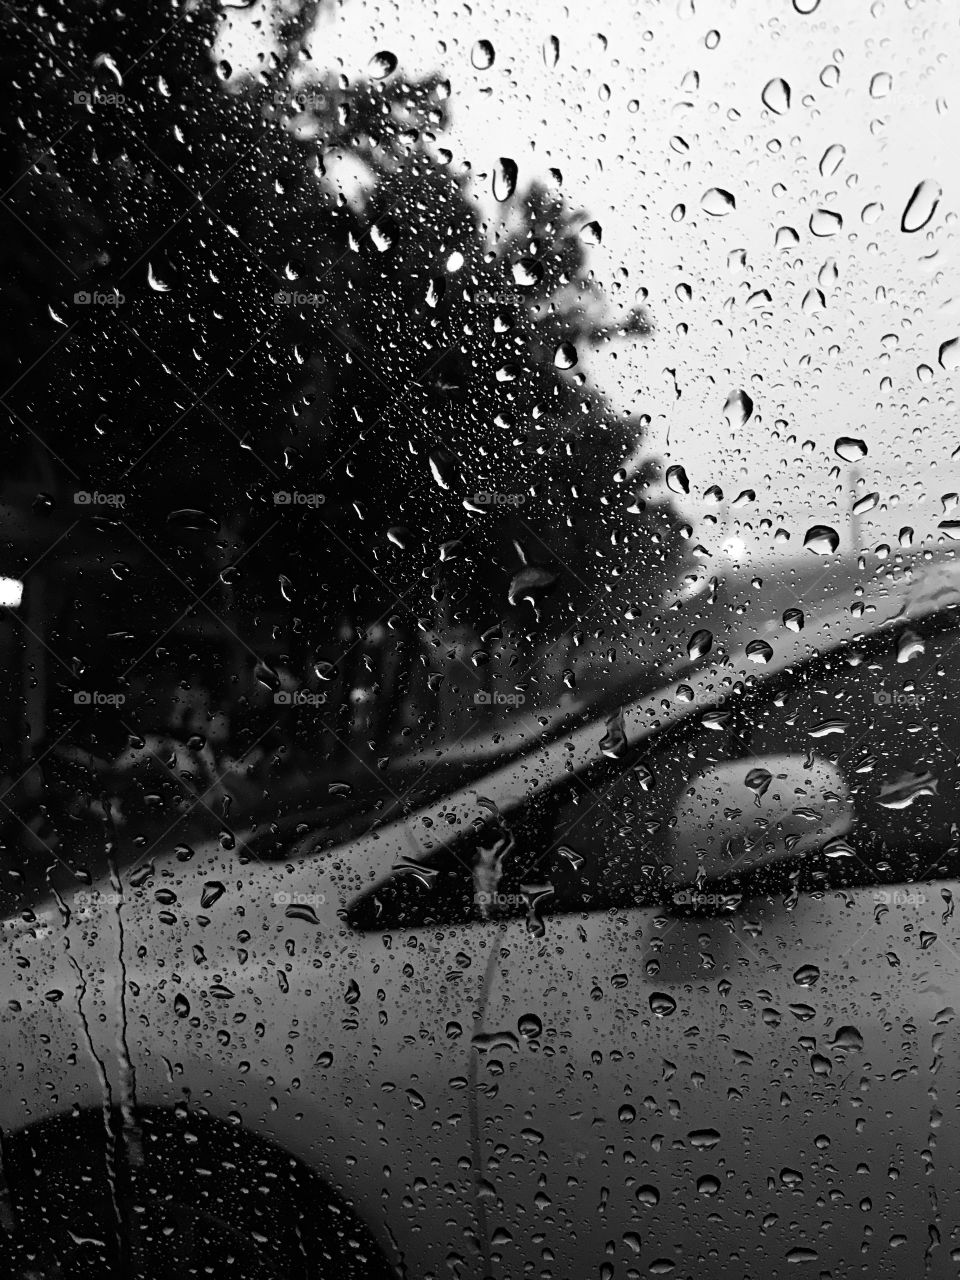 I’m in car when raining !!